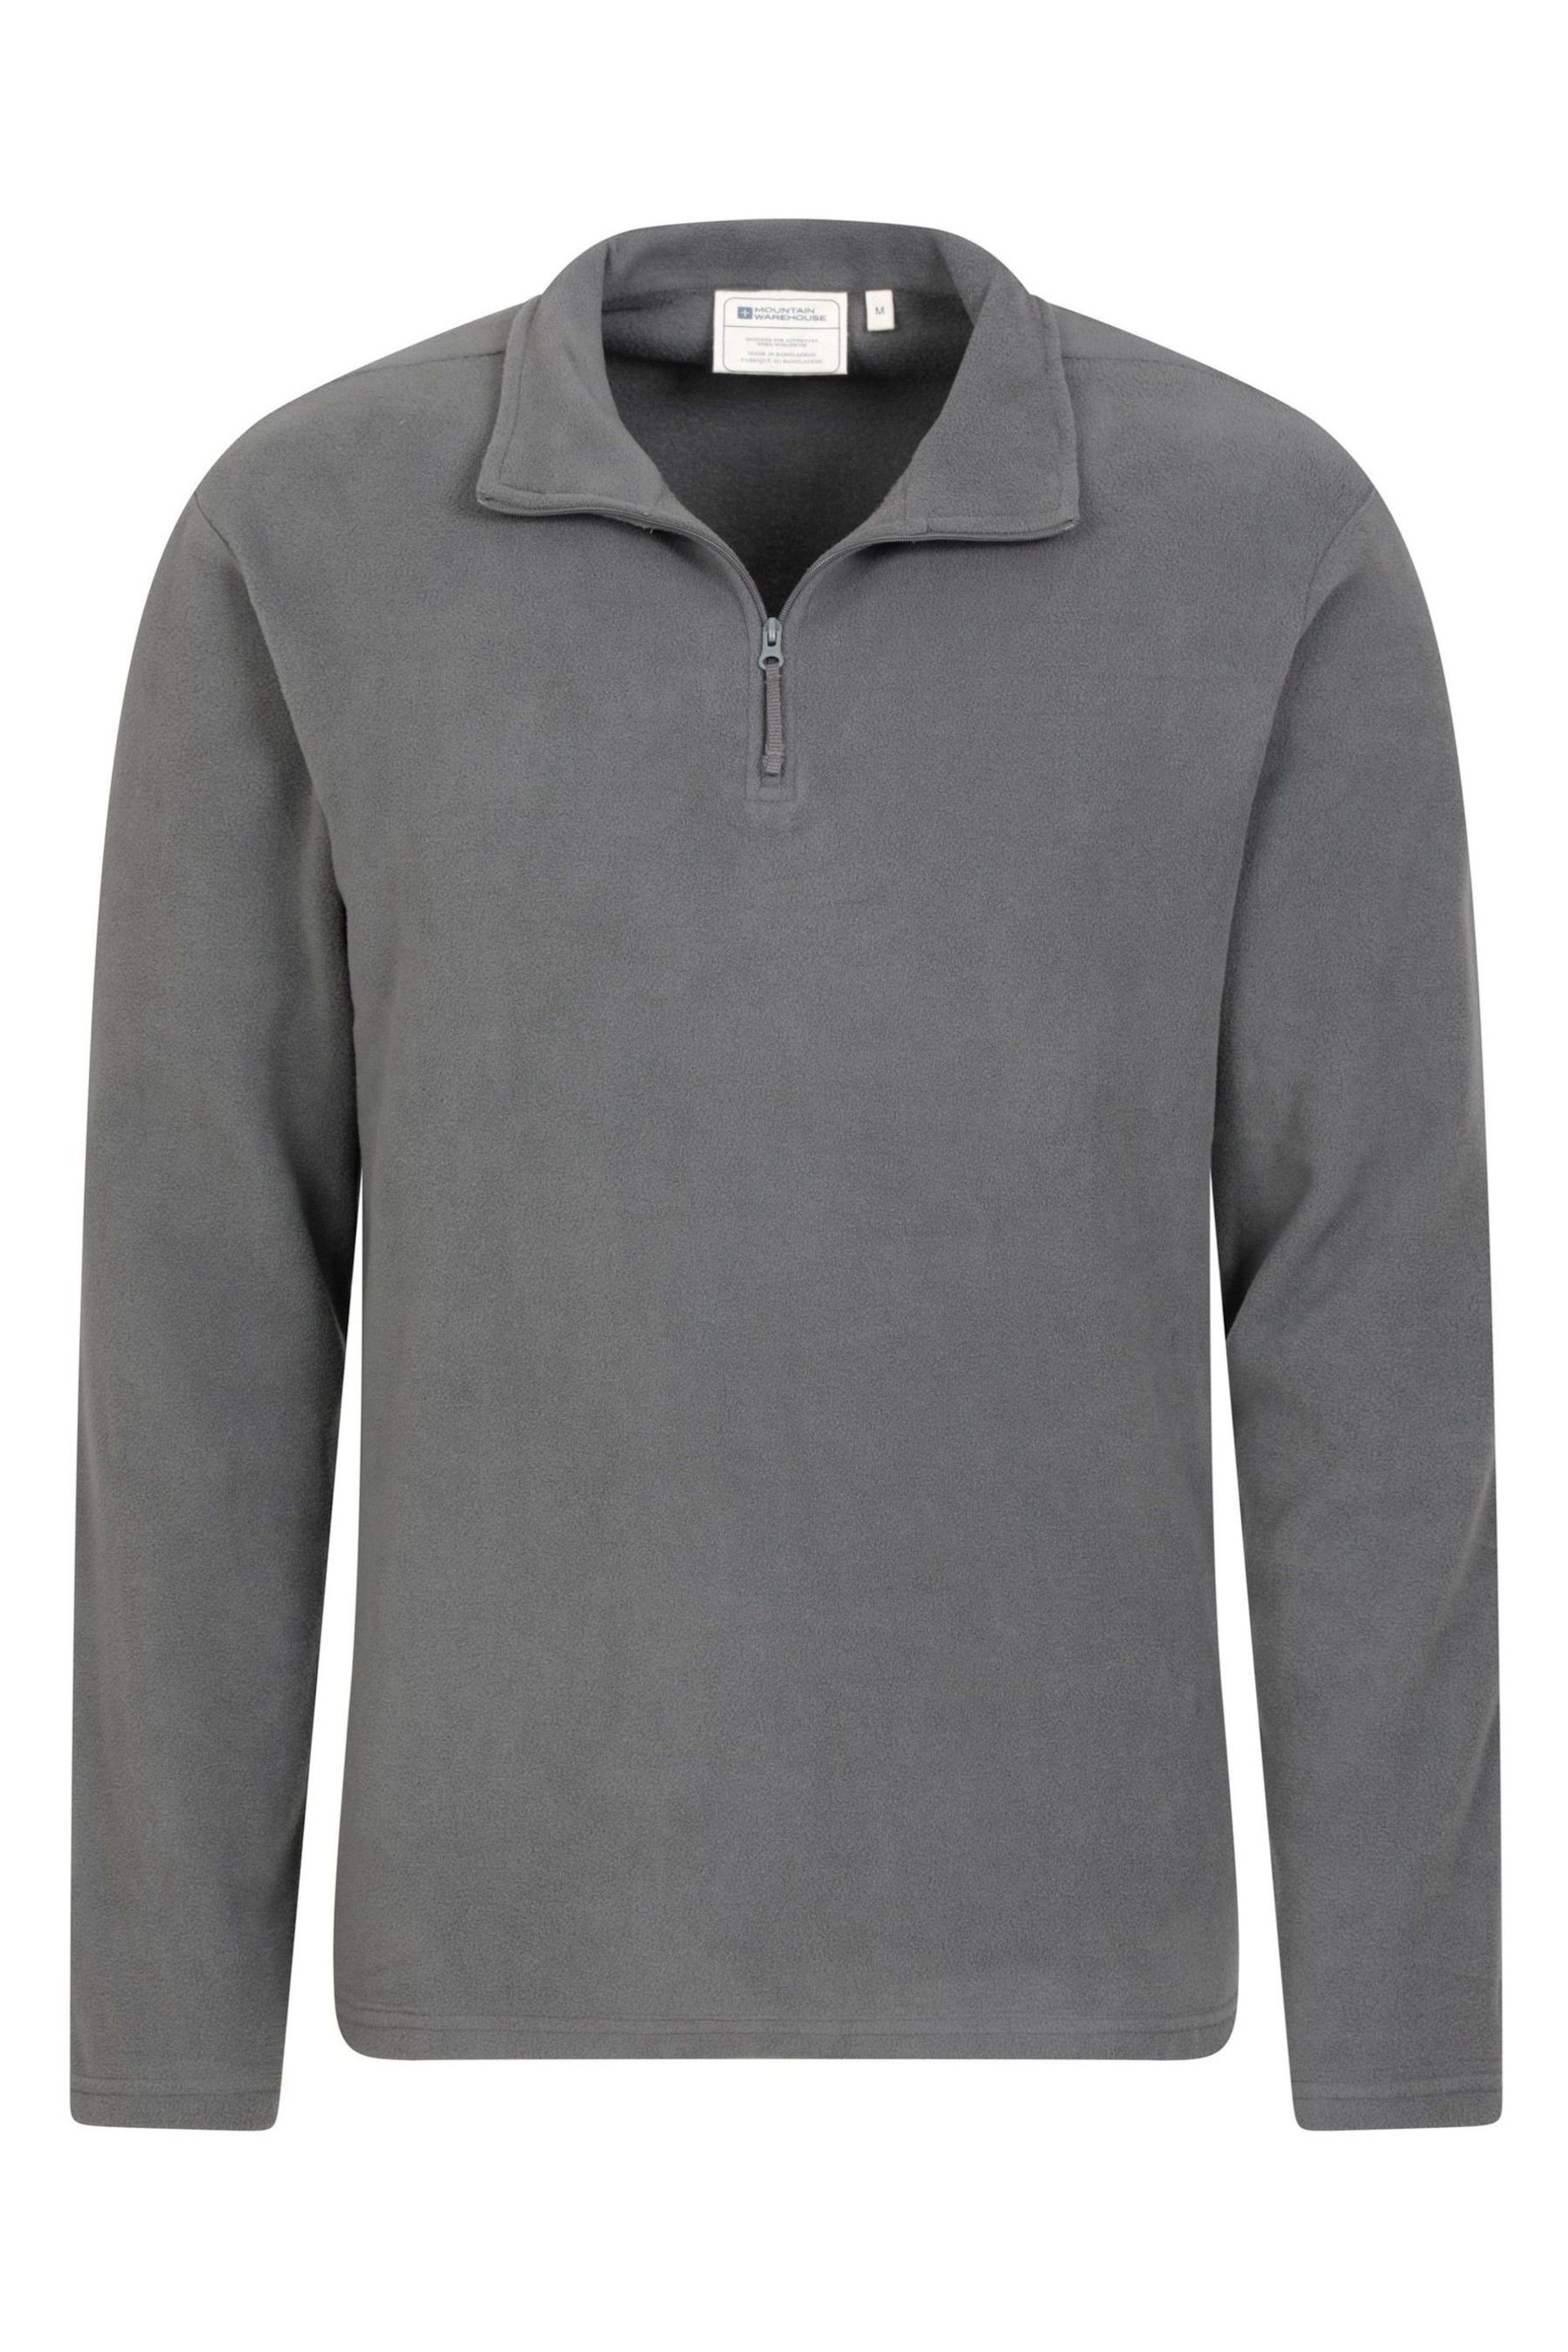 Mountain Warehouse Grey Mens Camber Half Zip Fleece - Image 4 of 5